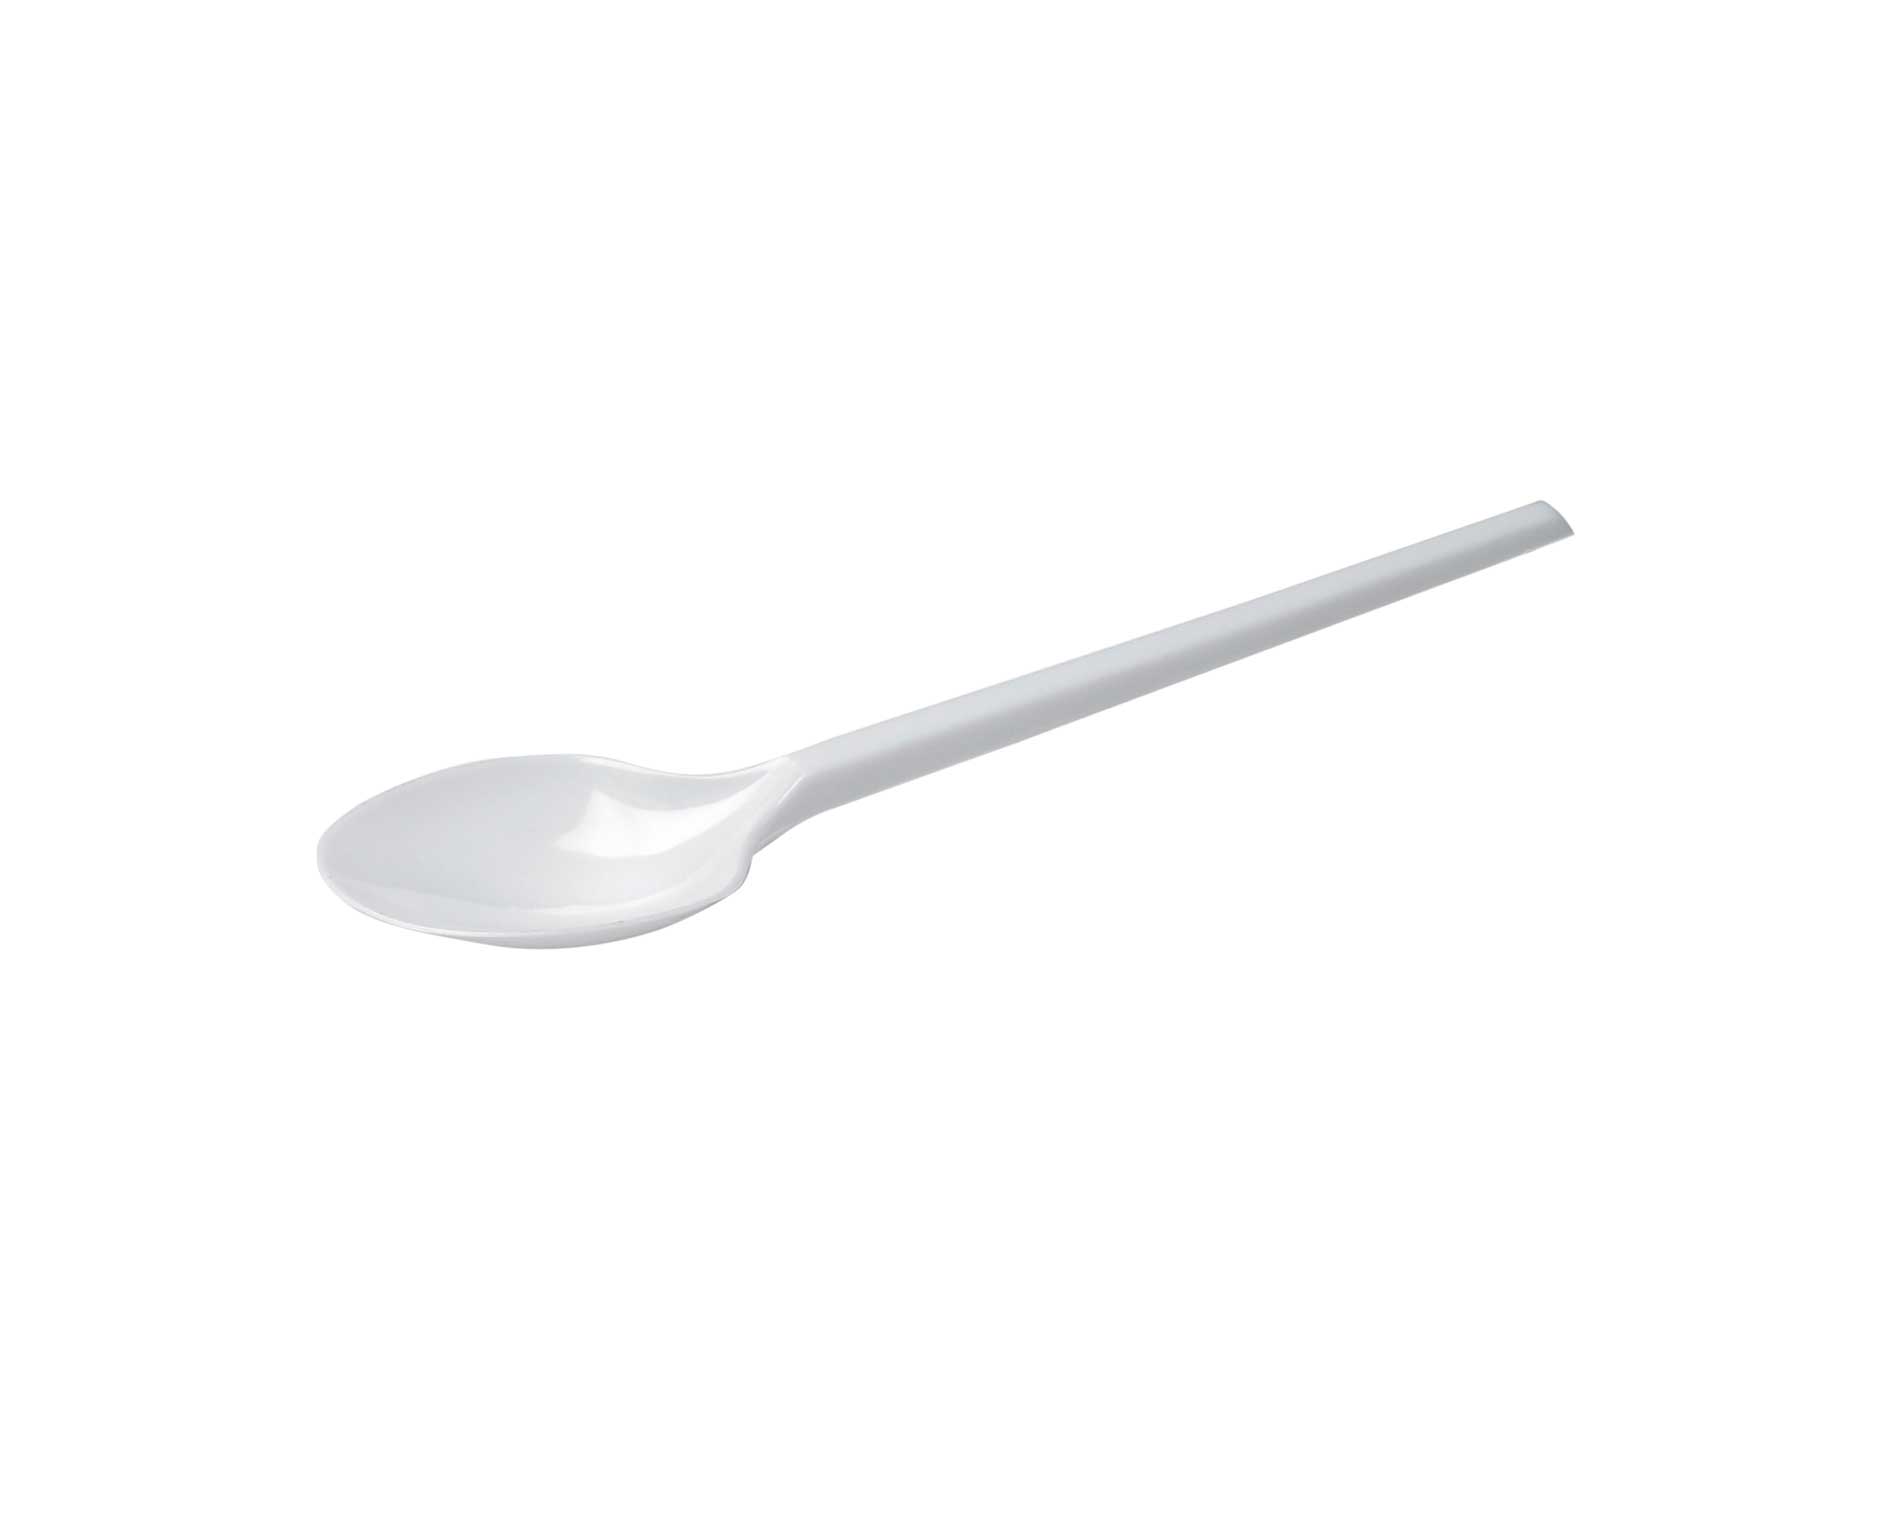 Plastic Spoon Clipart Pics For   Plastic Spoon Png